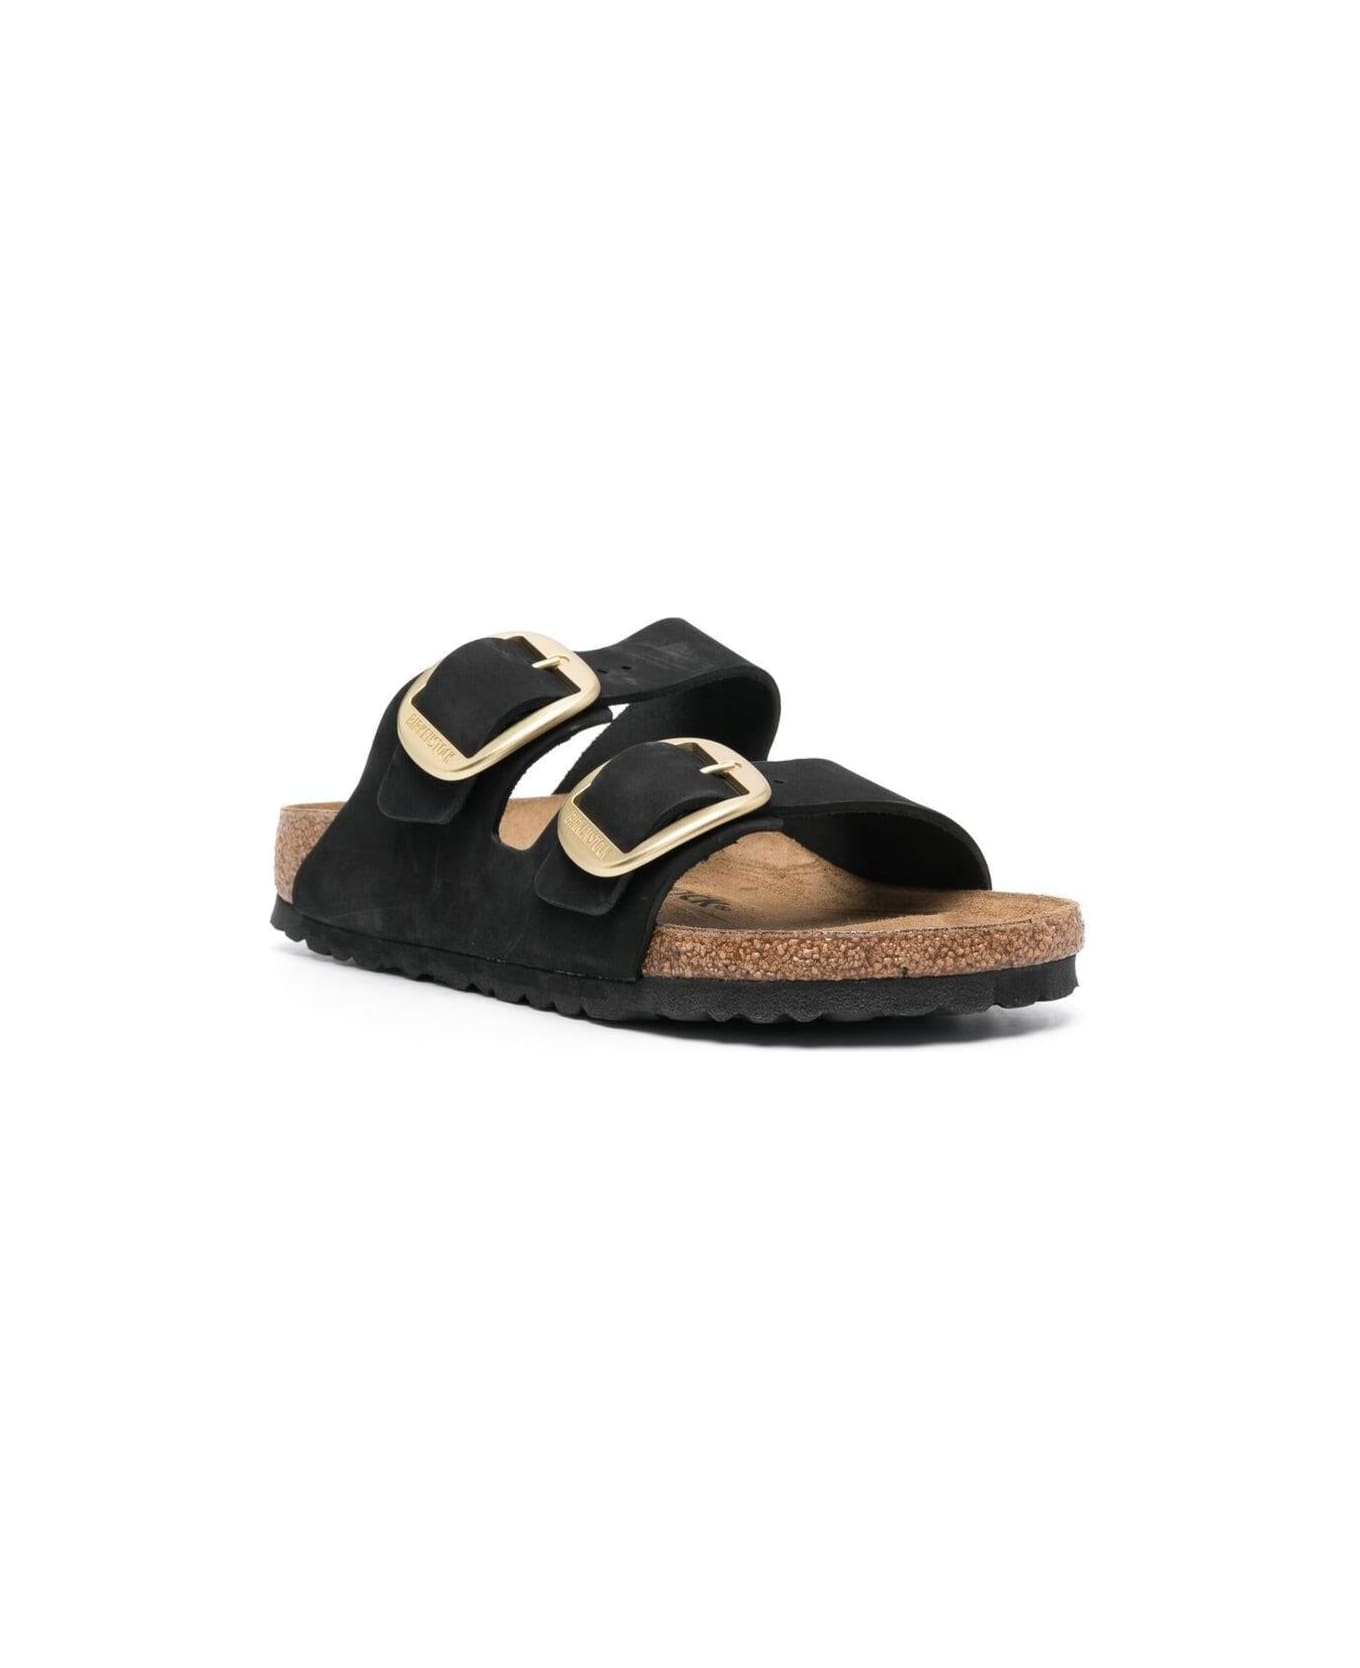 Birkenstock Black 'arizona' Strap-sandals With Golden-tone Buckle In Leather - Black